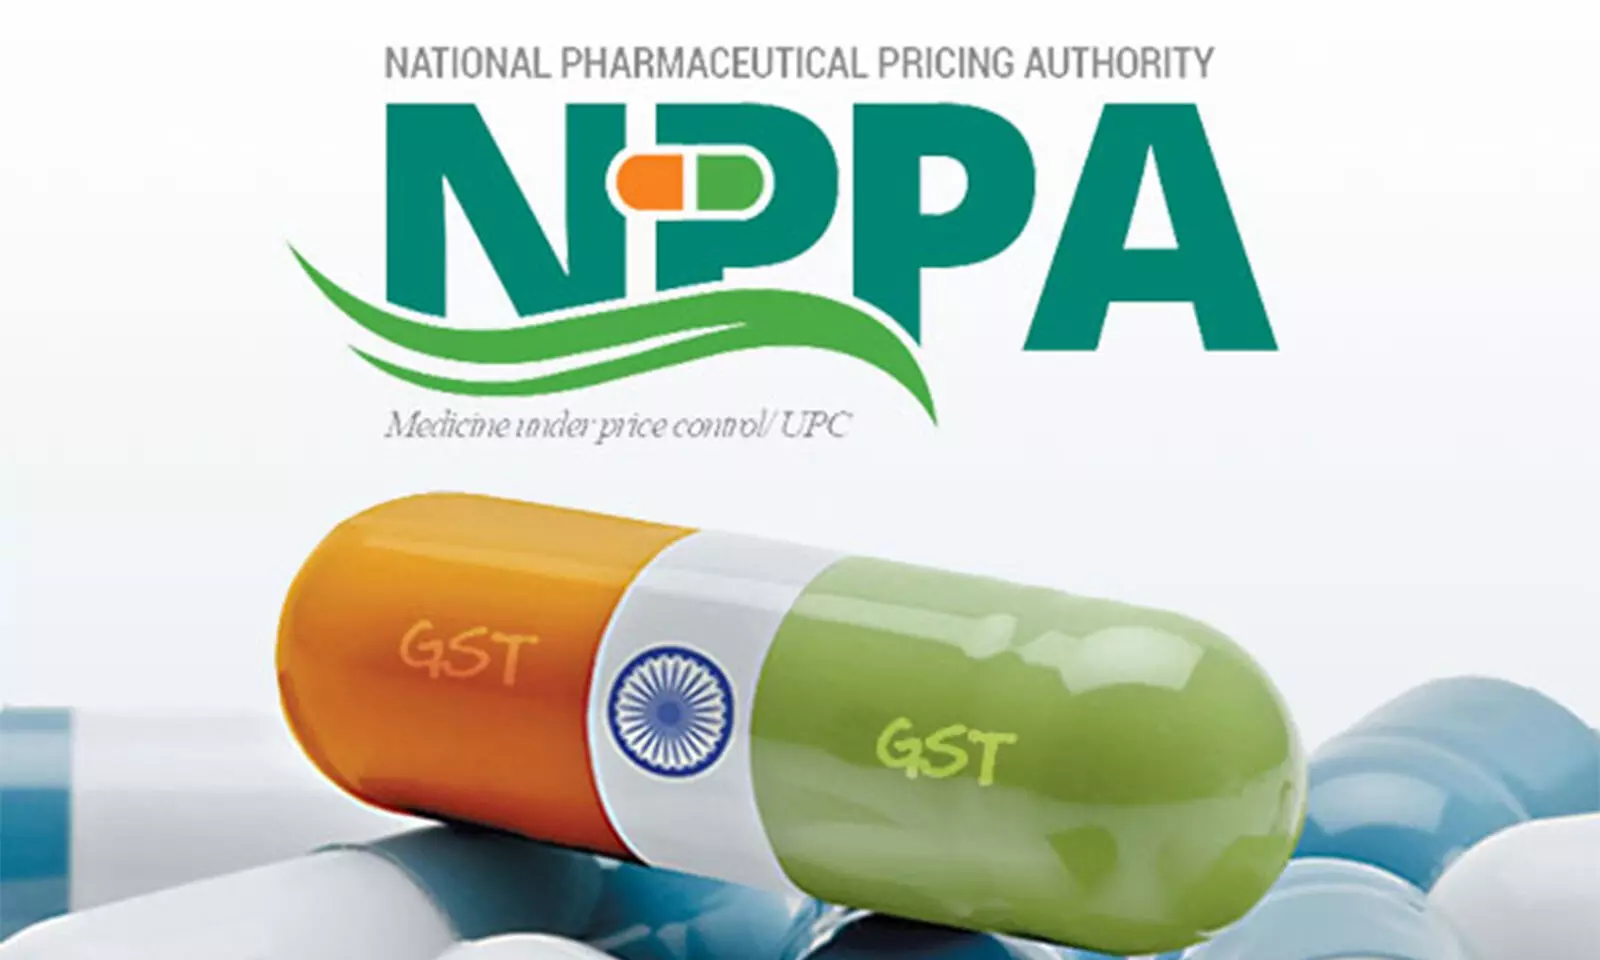 NPPA fixes retail prices of 37 formulations, including Sitagliptin- Metformin combinations